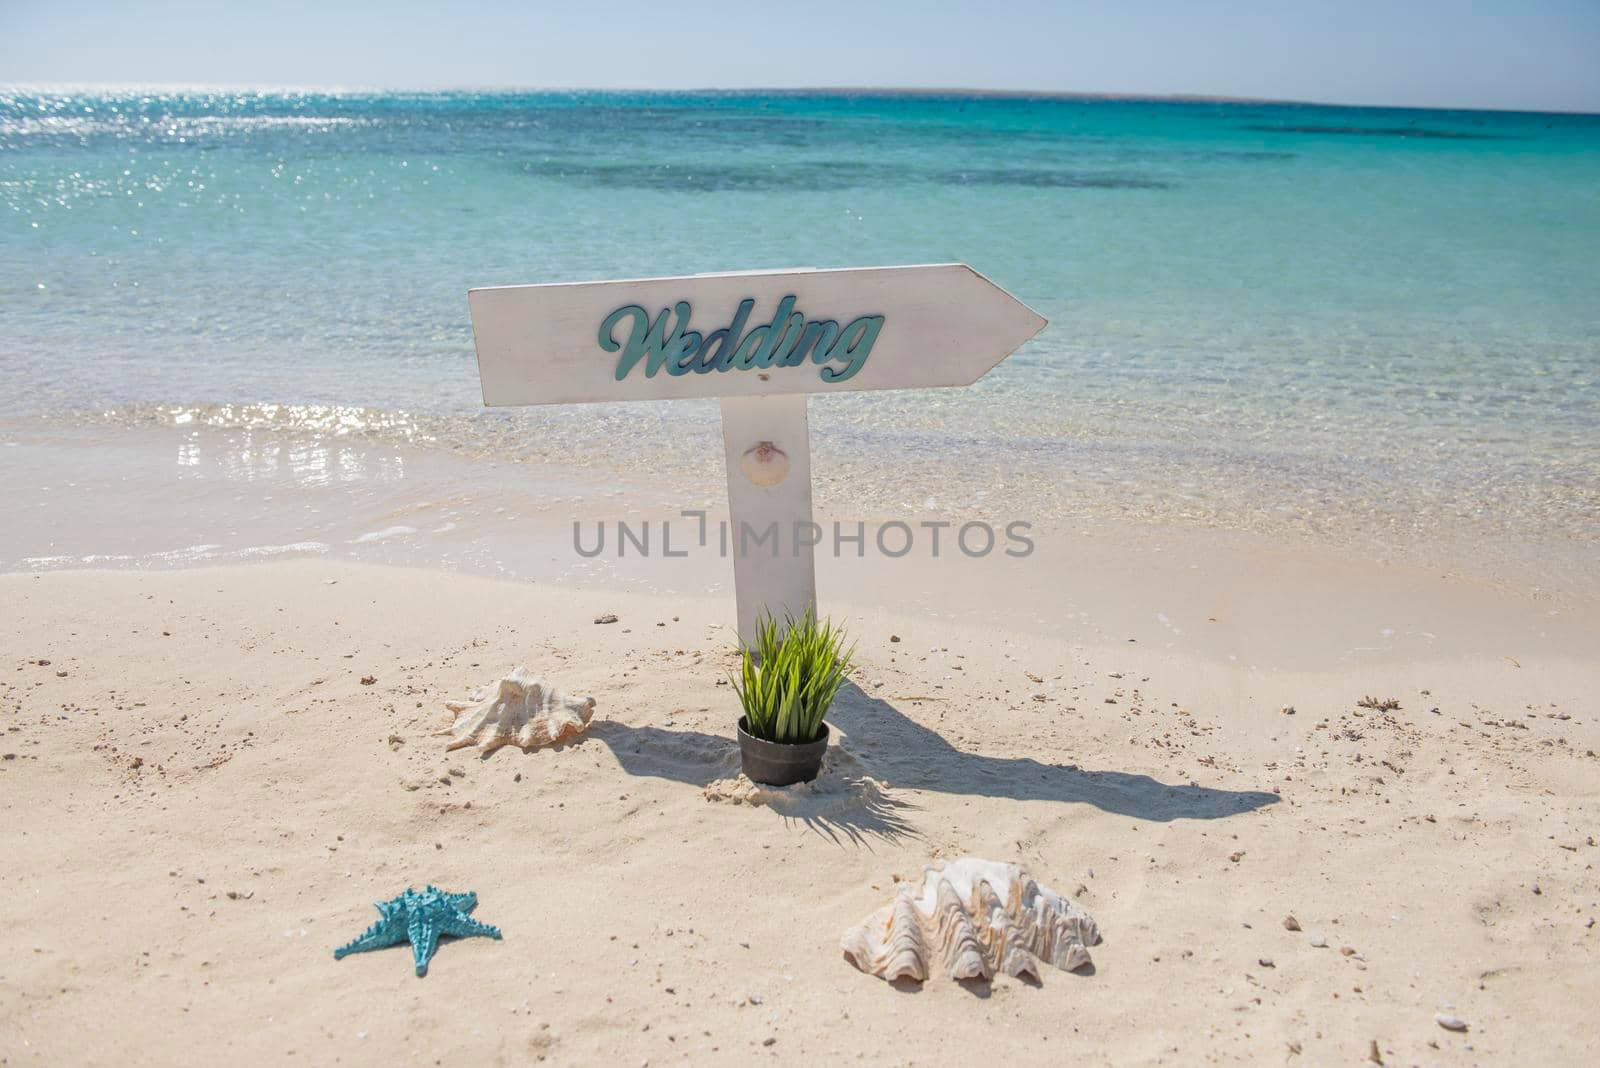 Wedding sign on a tropical beach paradise by paulvinten